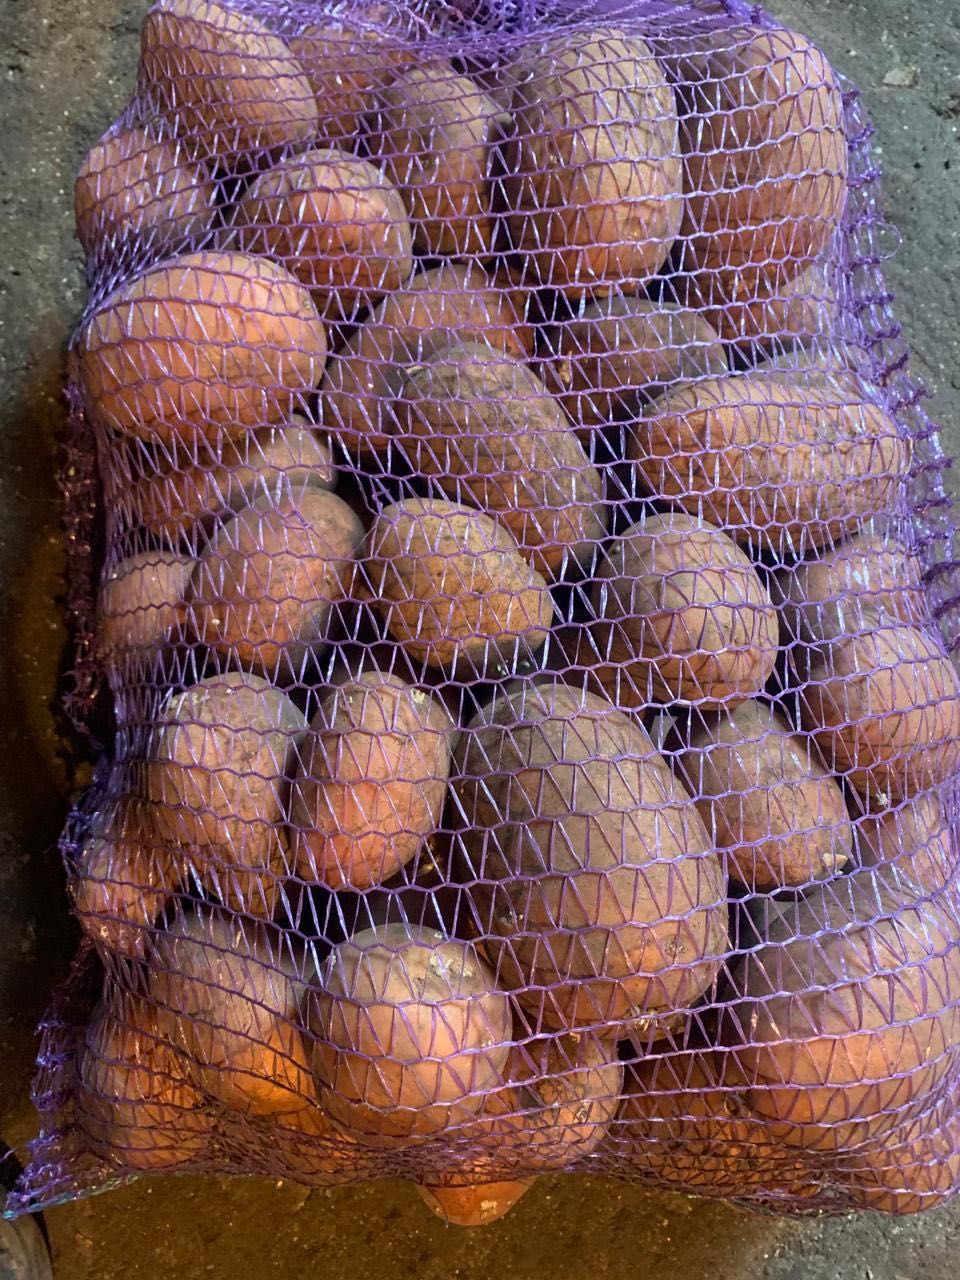 Продам велику смачну картоплю беллароза
по 10 грн. 300кг.